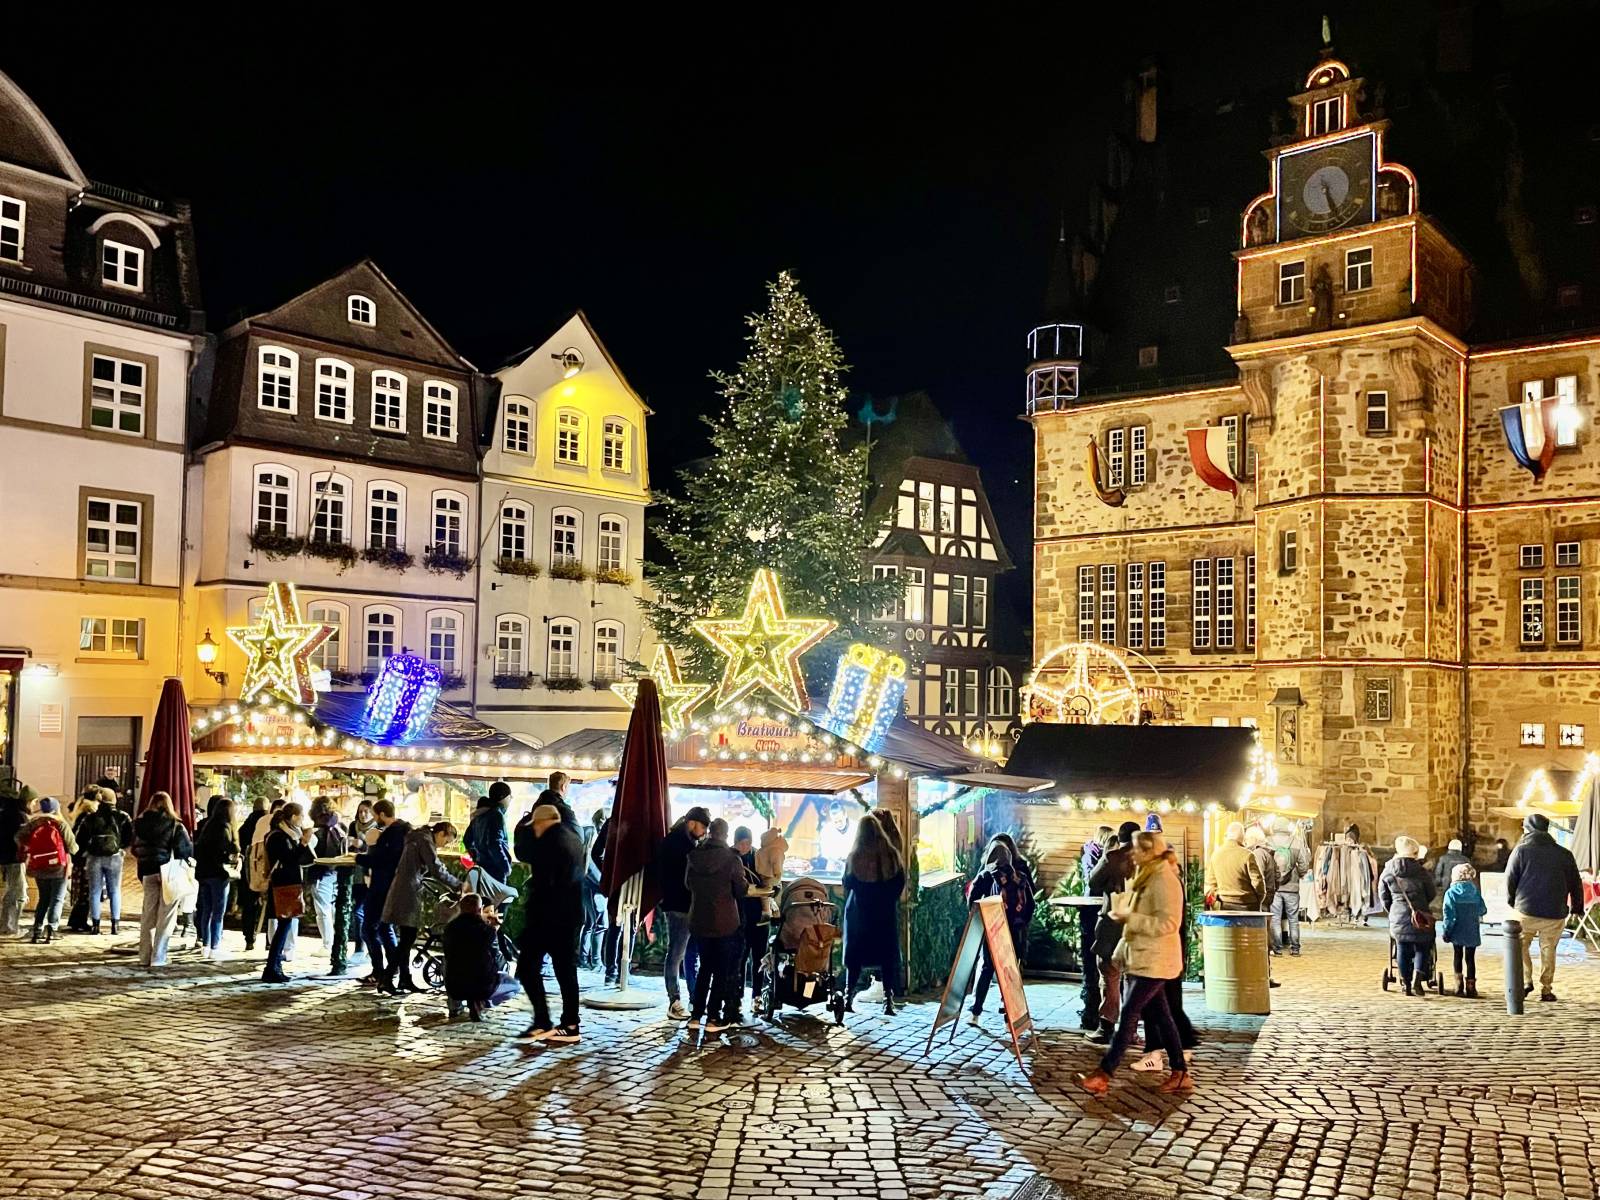 Take a stroll through the Marburg Christmas market